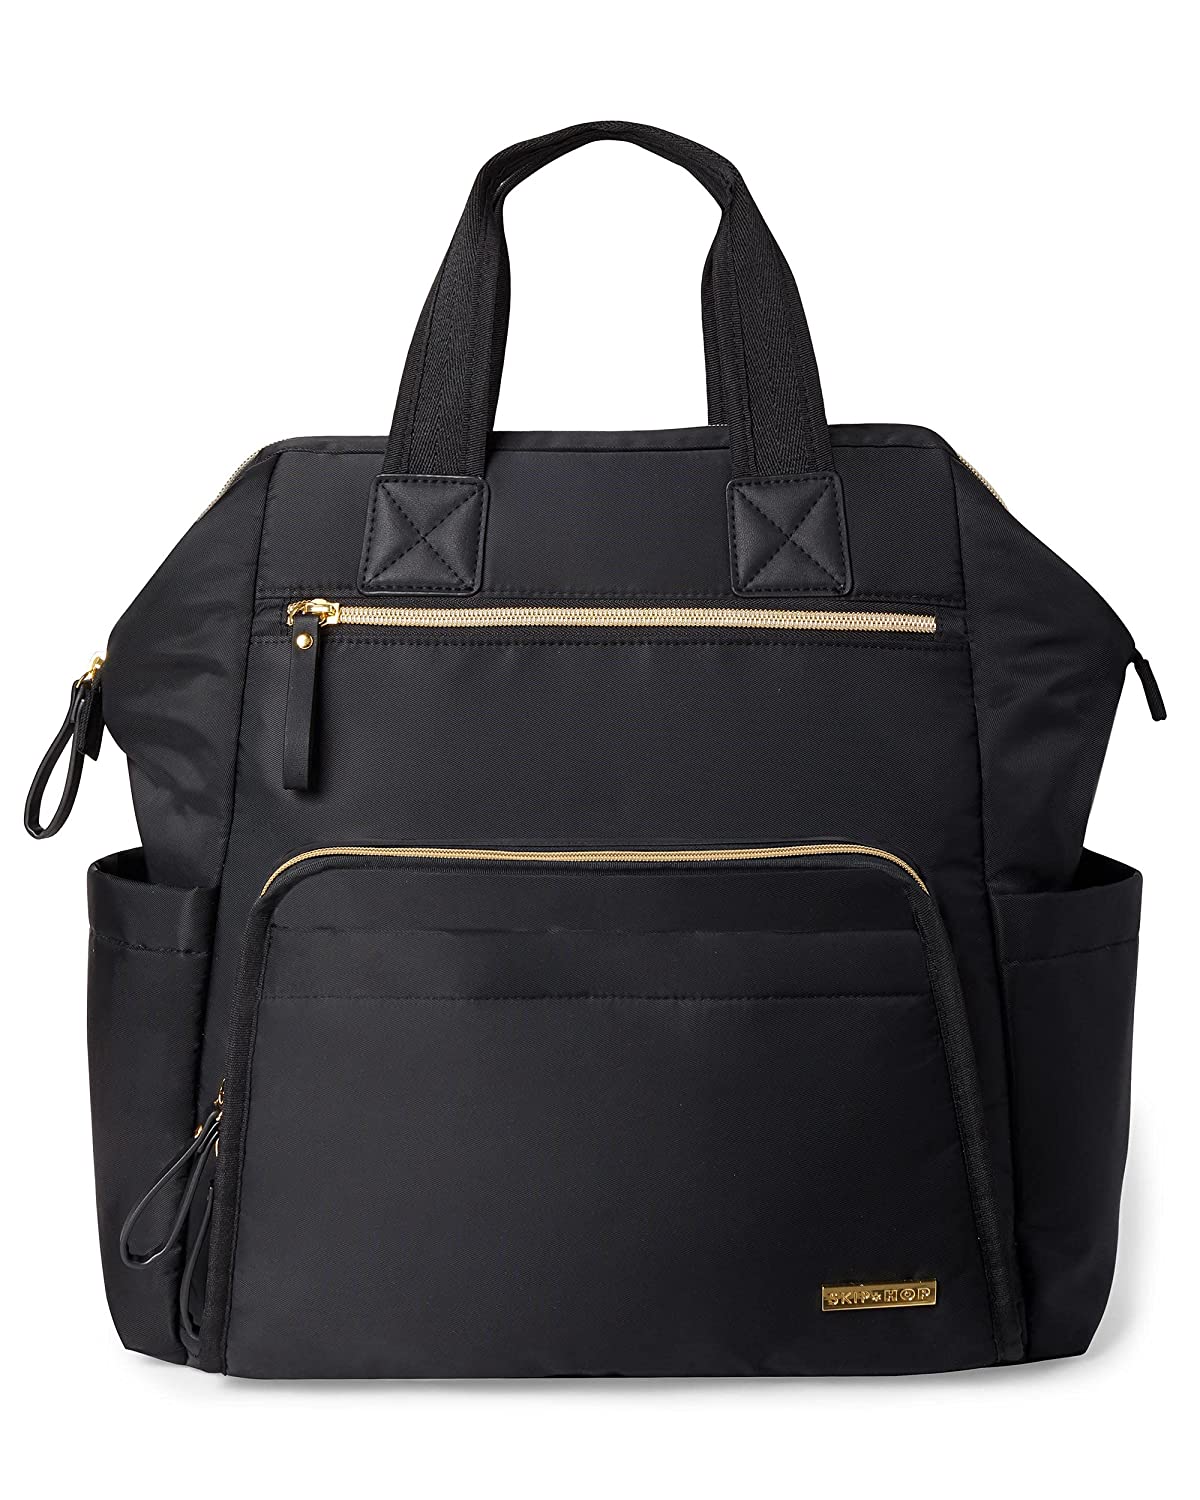 Wide Open Backpack- Black